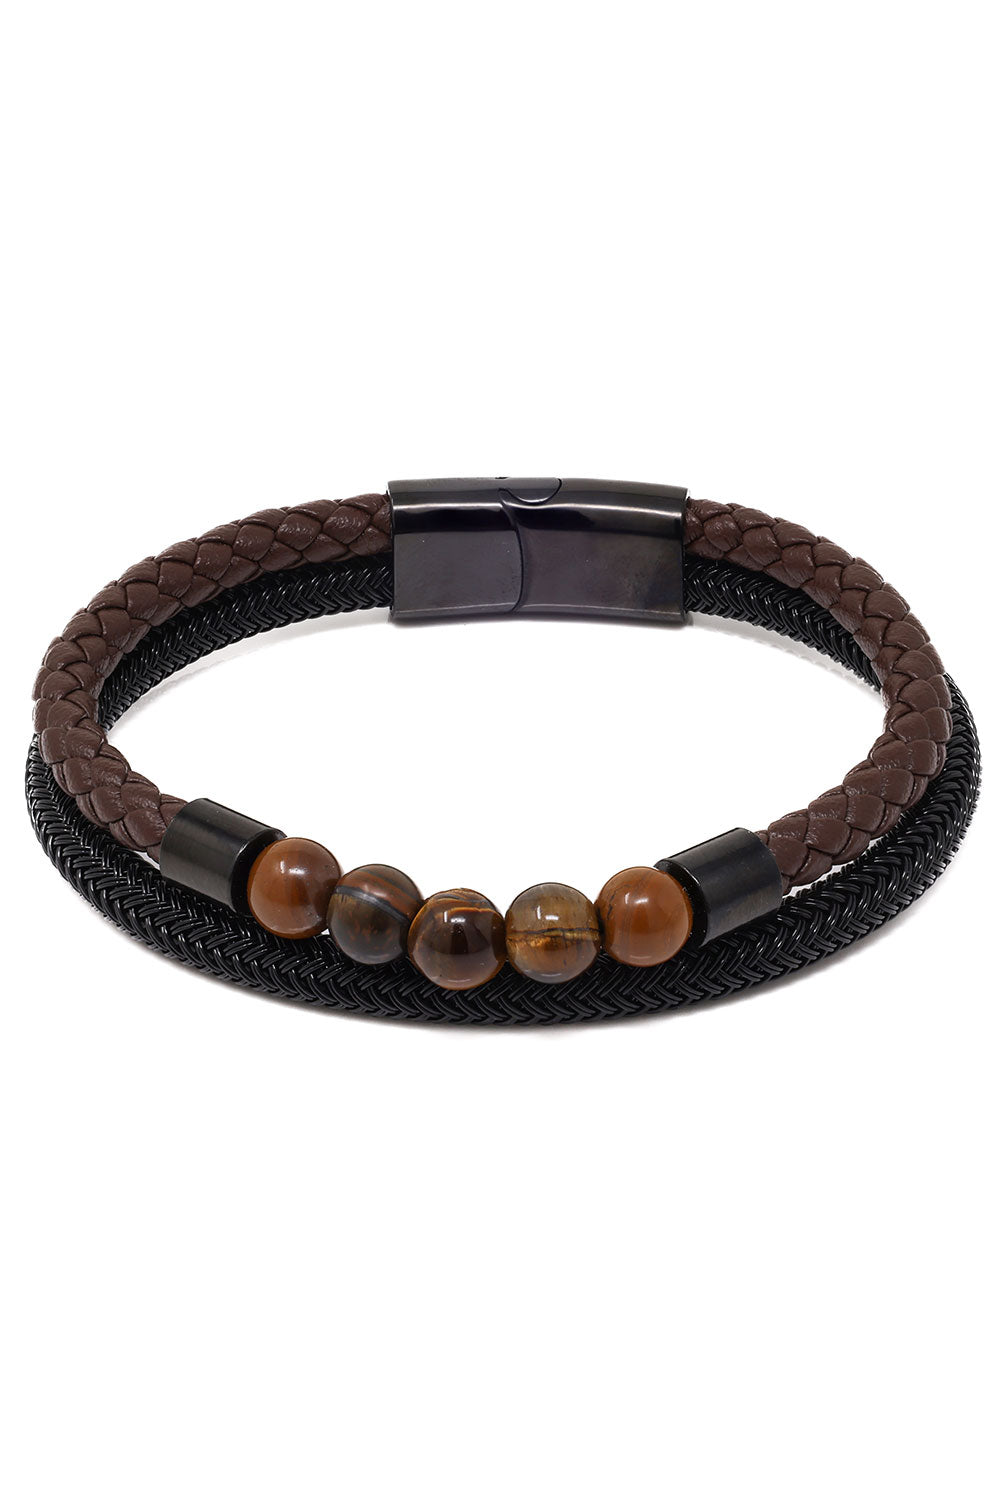 Barabas Unisex Obsidian Stone Braided Leather Bangle Bracelets 4BMS04 Brown Black